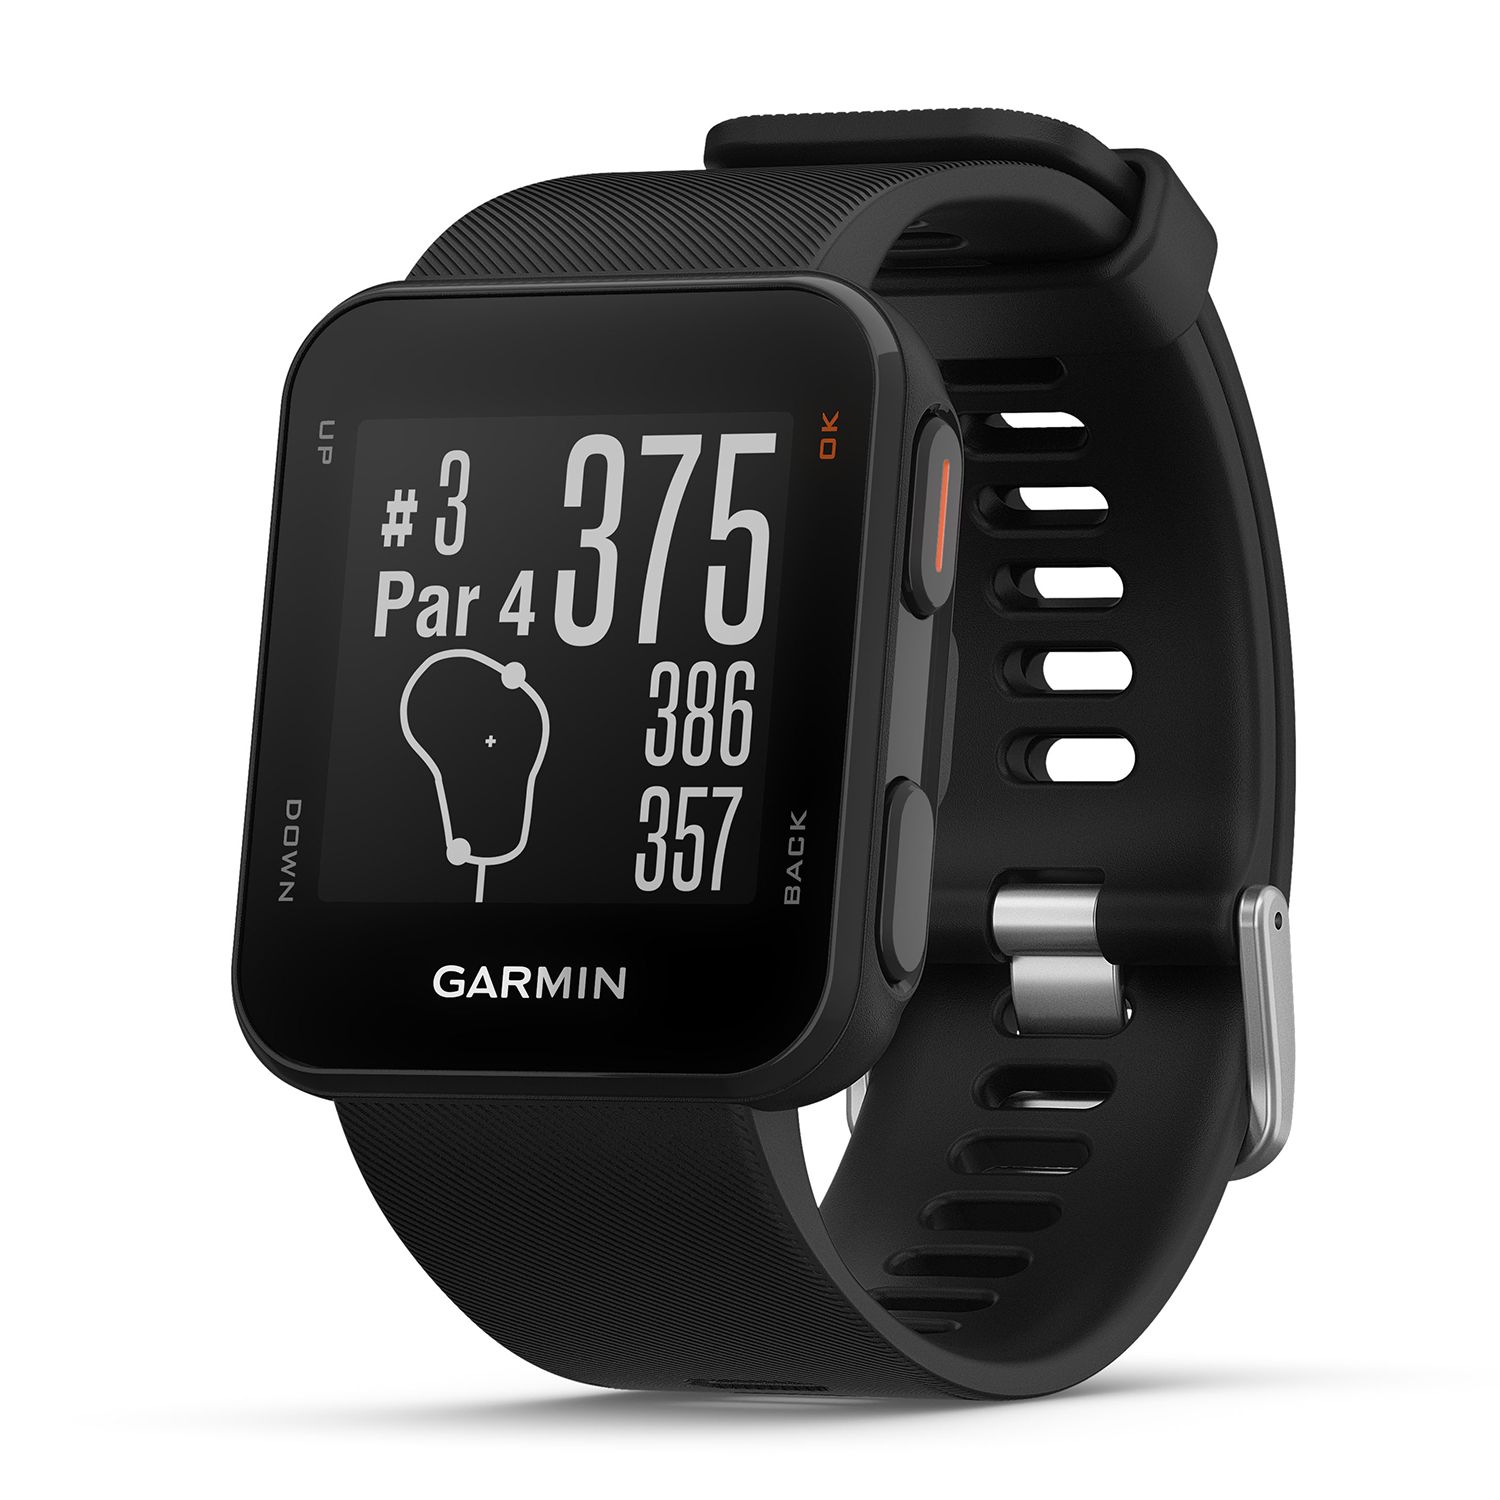 garmin golf smartwatch